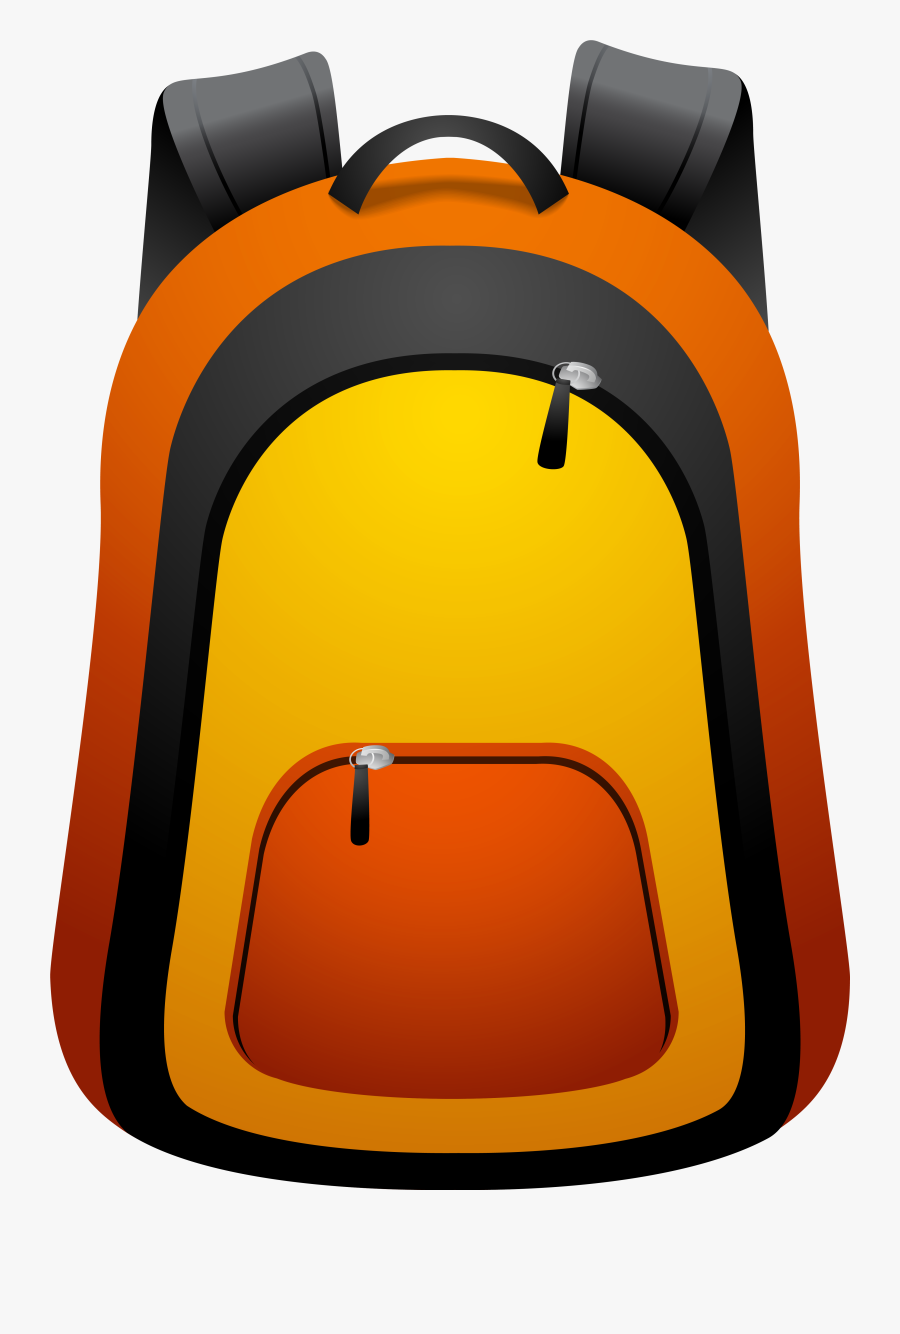 Backpack Png Clipart Image - Transparent Background Backpack Clipart, Transparent Clipart